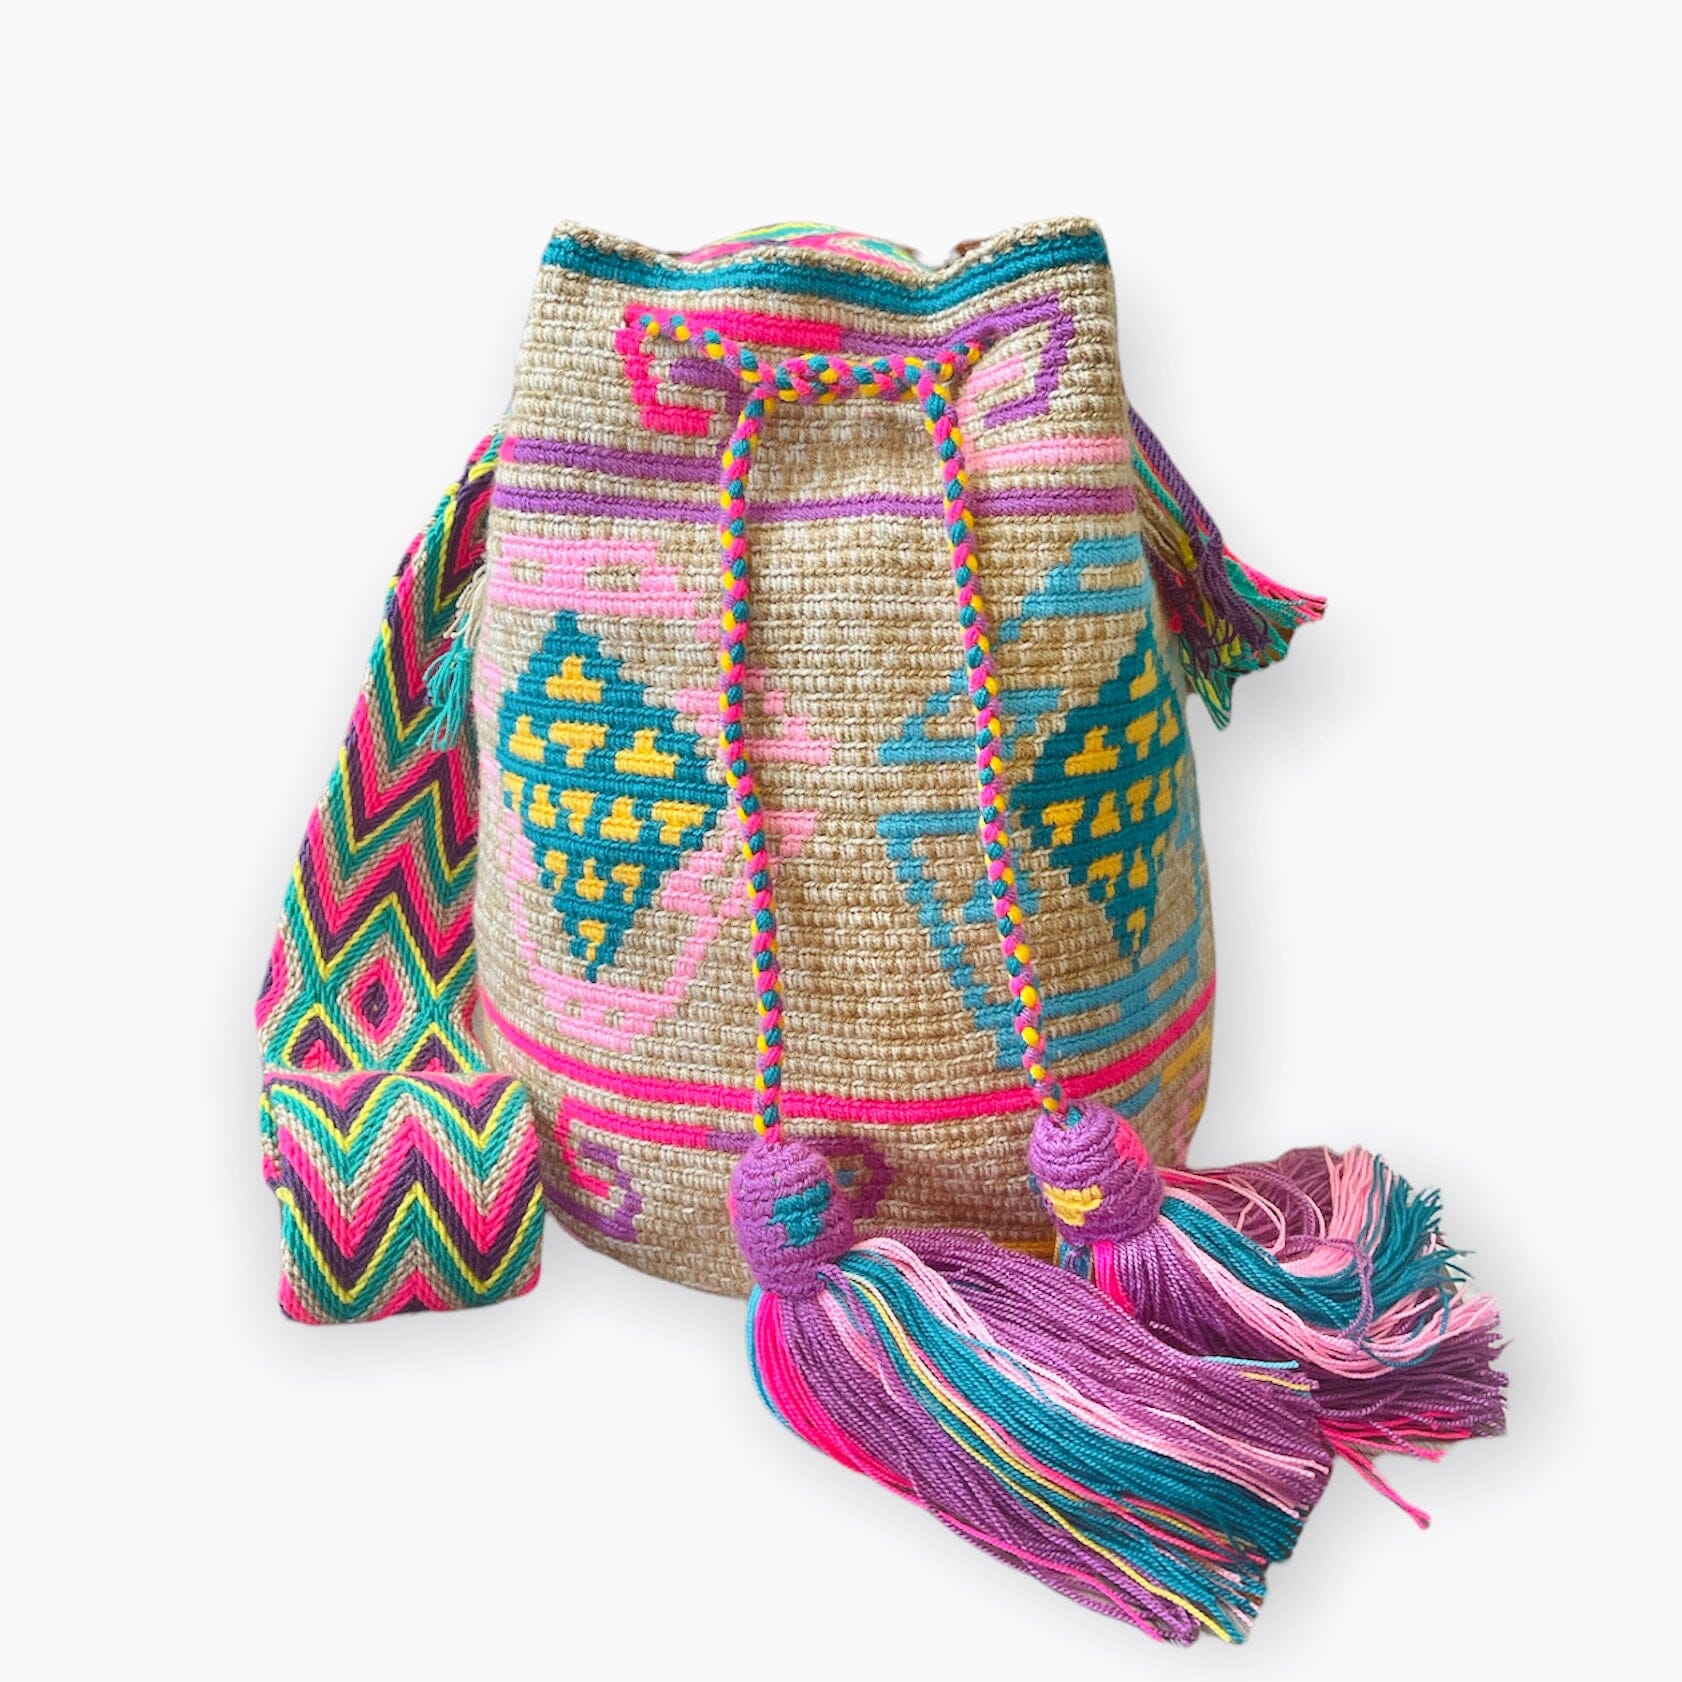 Colorful Crochet Boho Beach Bag - Crossbody/Shoulder Summer Bag- Wayuu DS114 Navajo